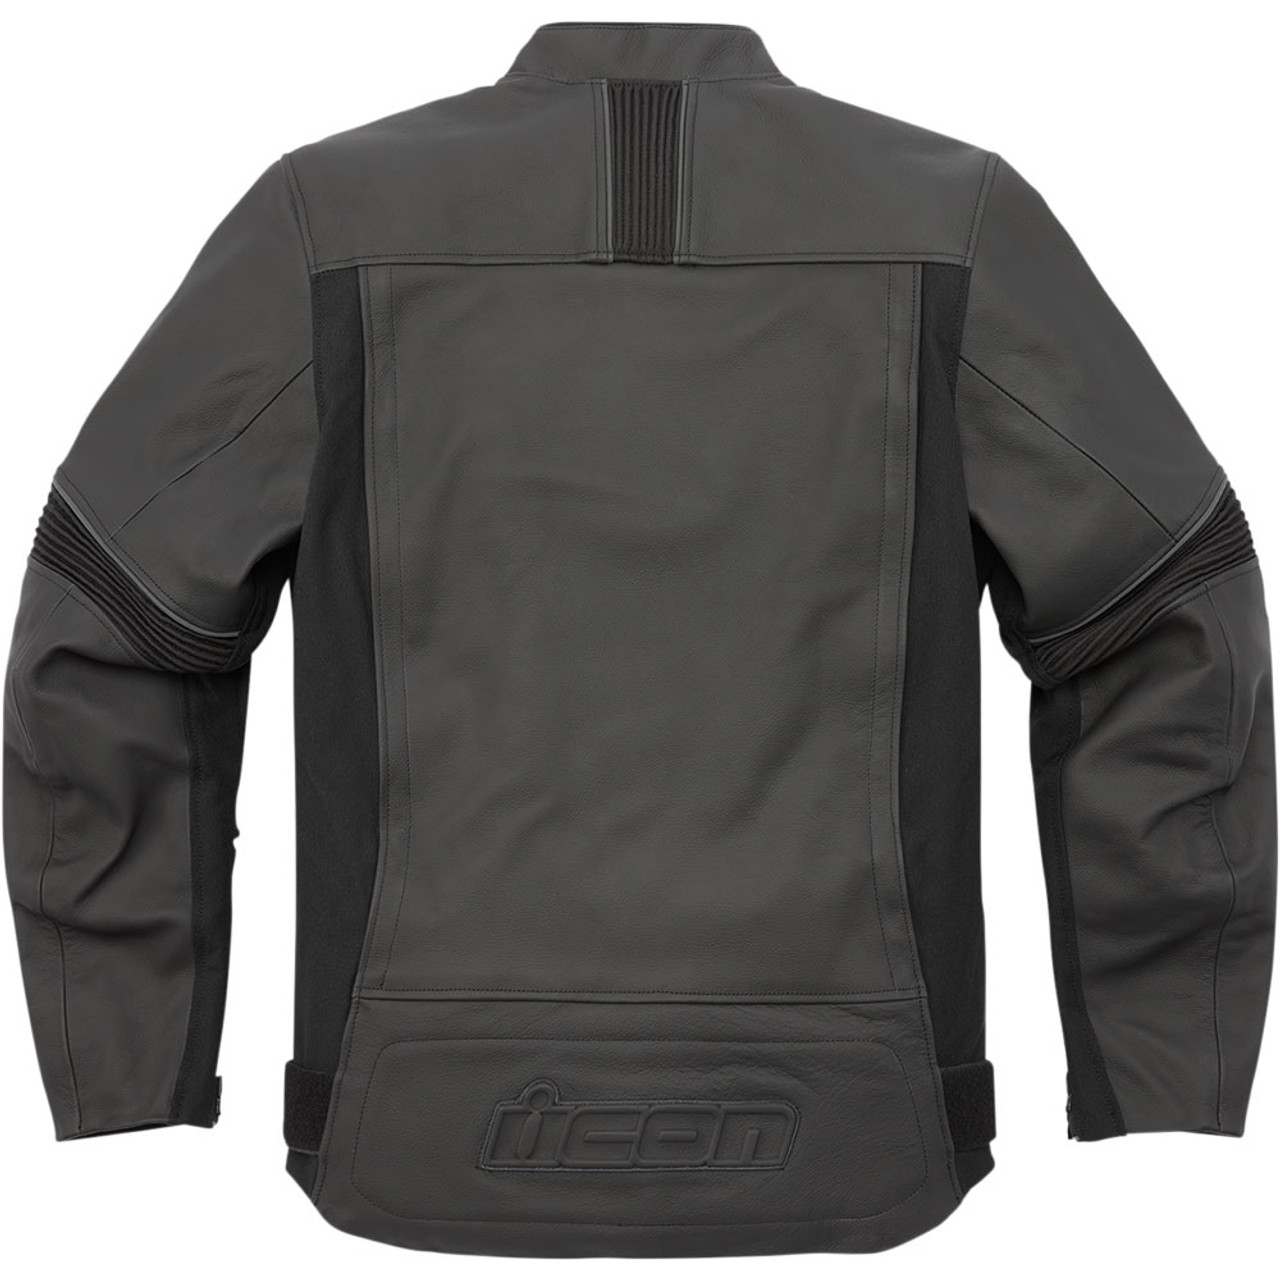 Motorhead Cool Premium 2D Leather Jacket Hood Black - Owl Fashion Shop